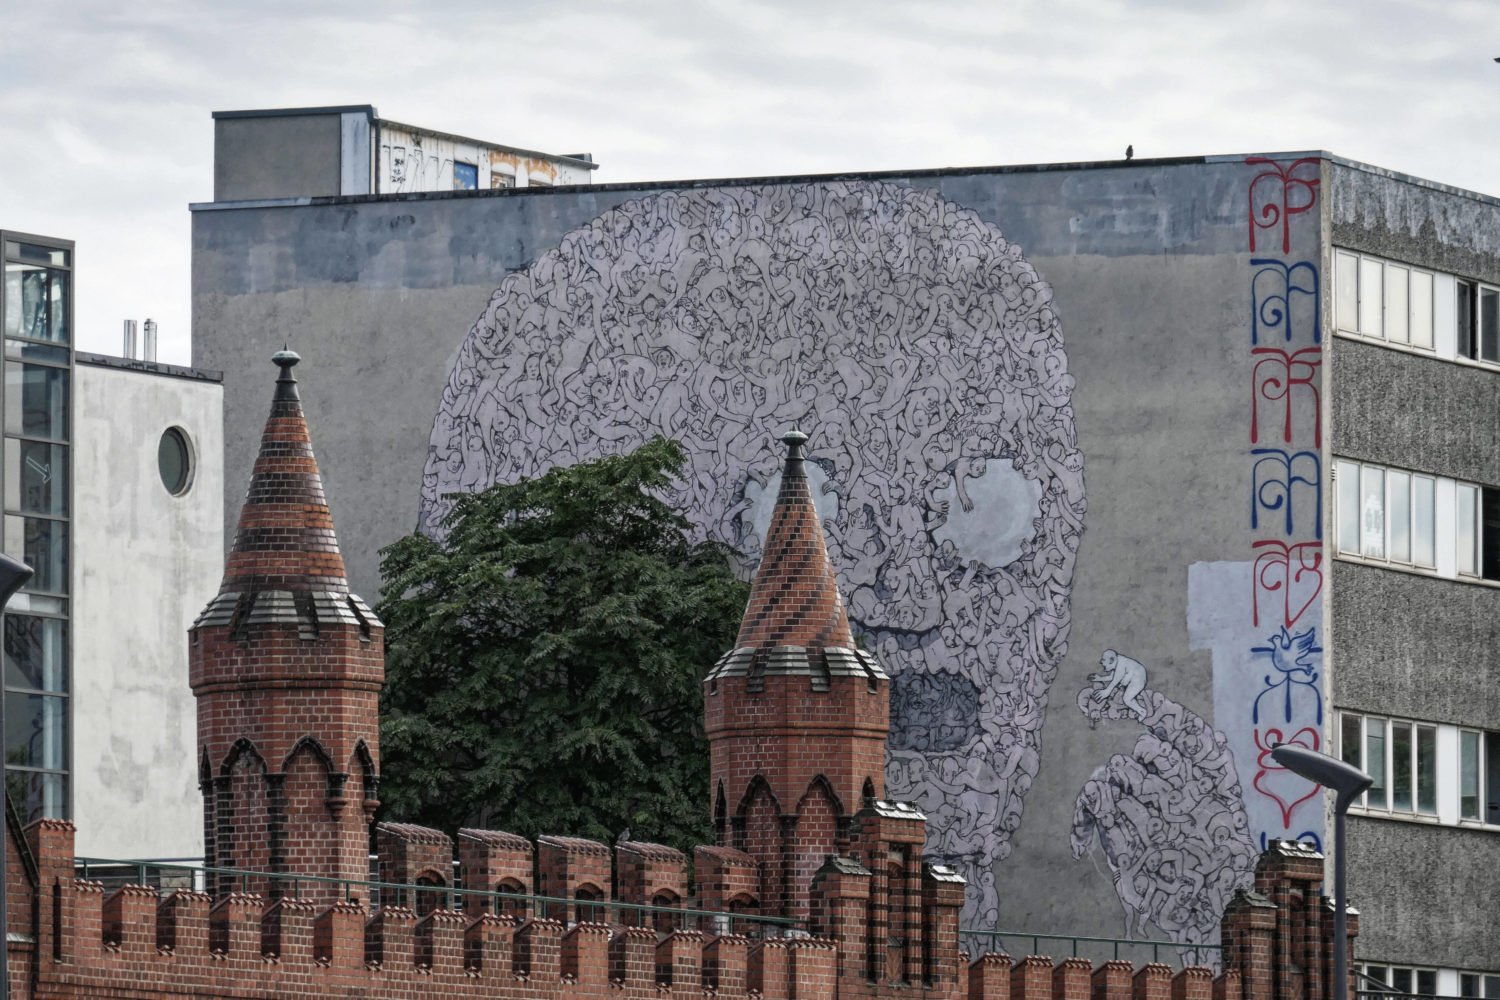 Ein Mural in der Nähe der Oberbaumbrücke in Kreuzberg. Foto: Imago/Travel-Stock-Image